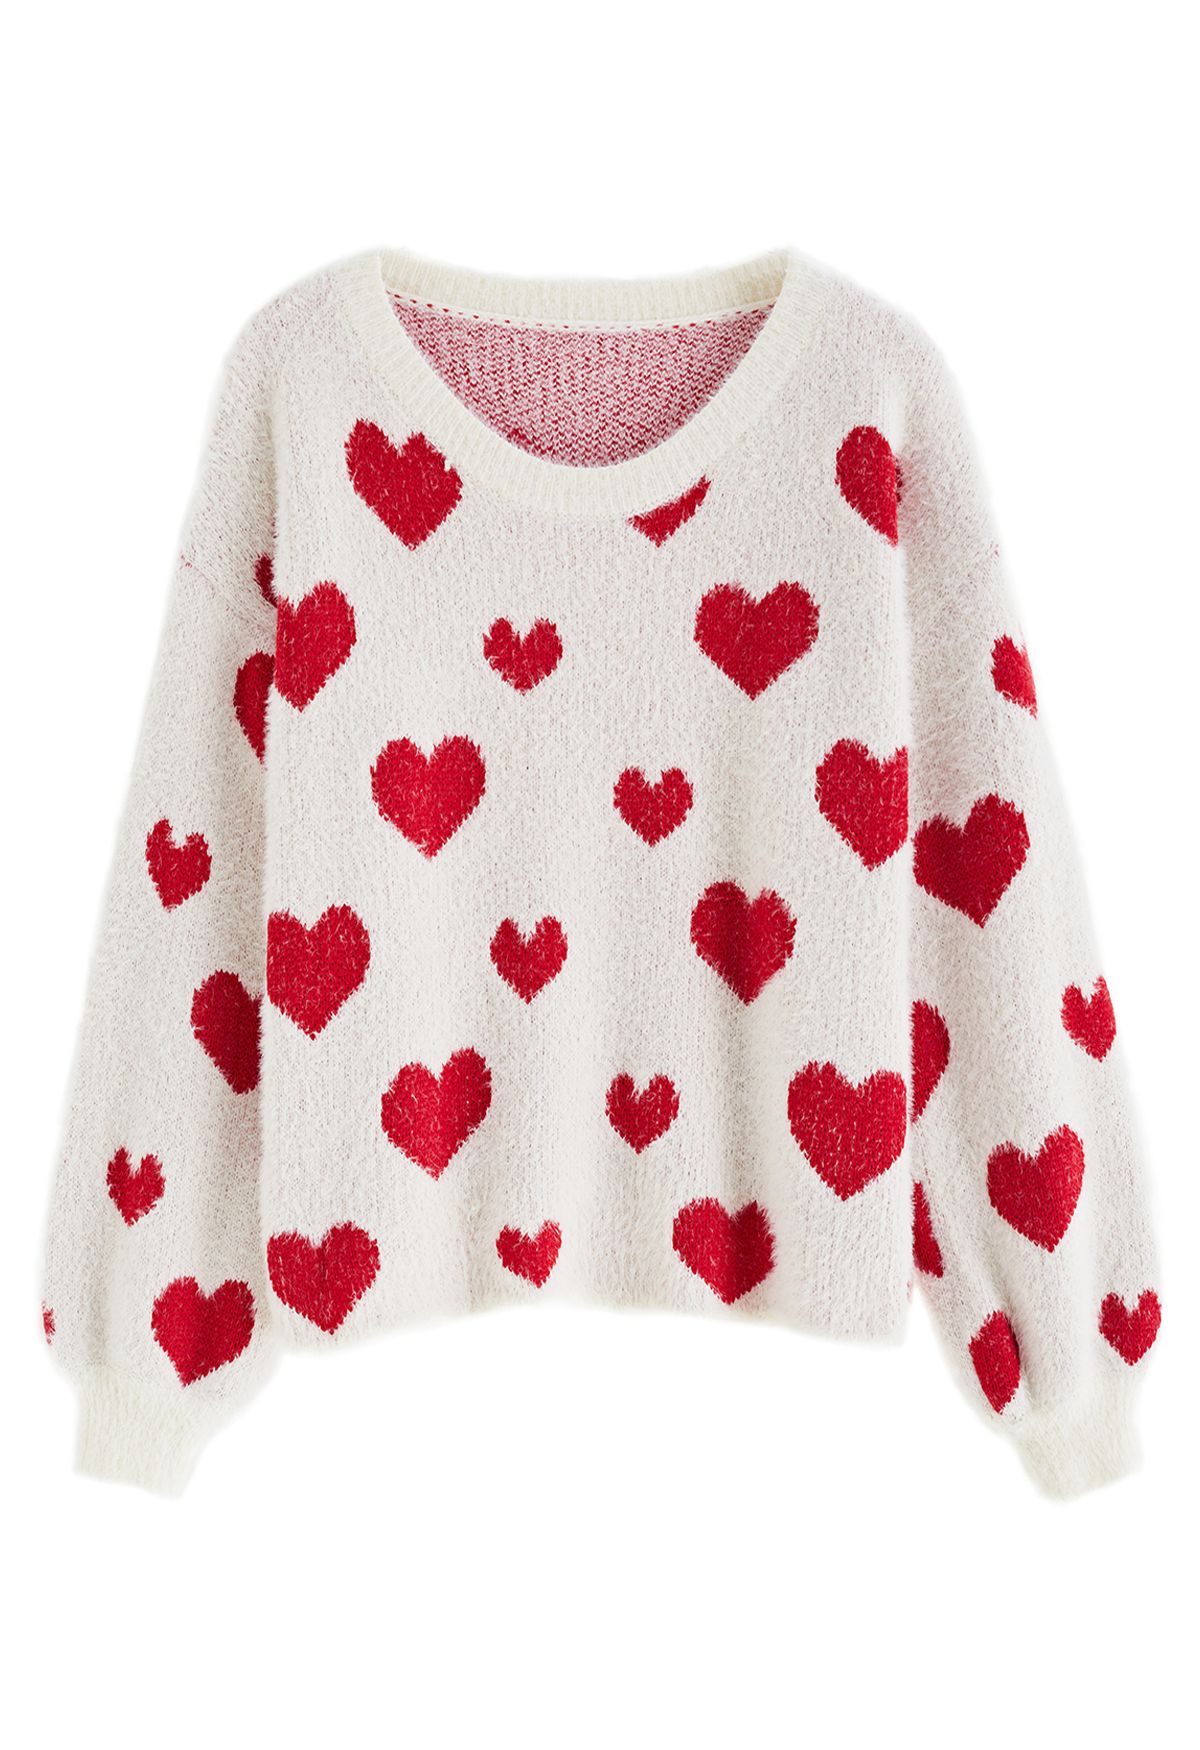 Fuzzy Heart Jacquard Knit Sweater in Cream